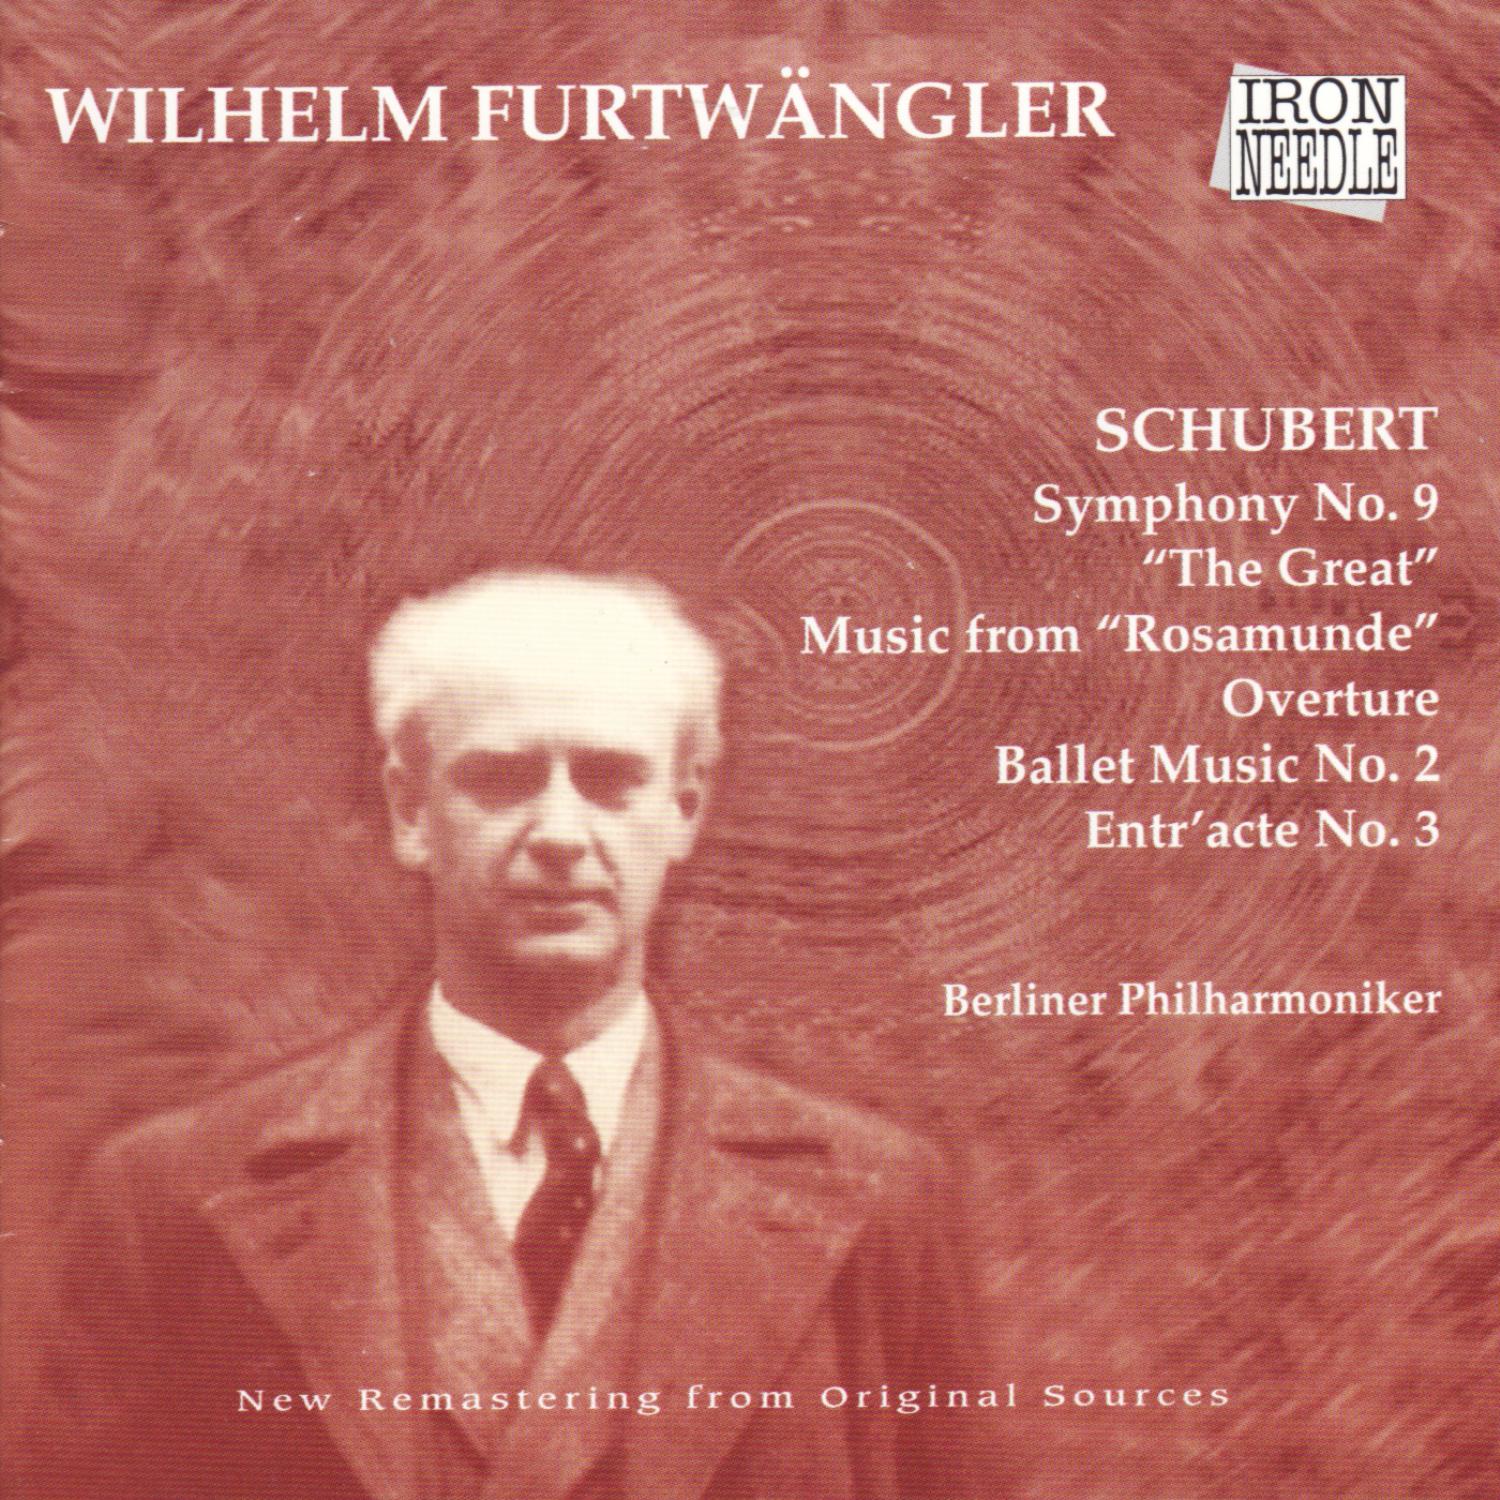 Schubert: Symphony No. 9 in C Major, Rosamunde